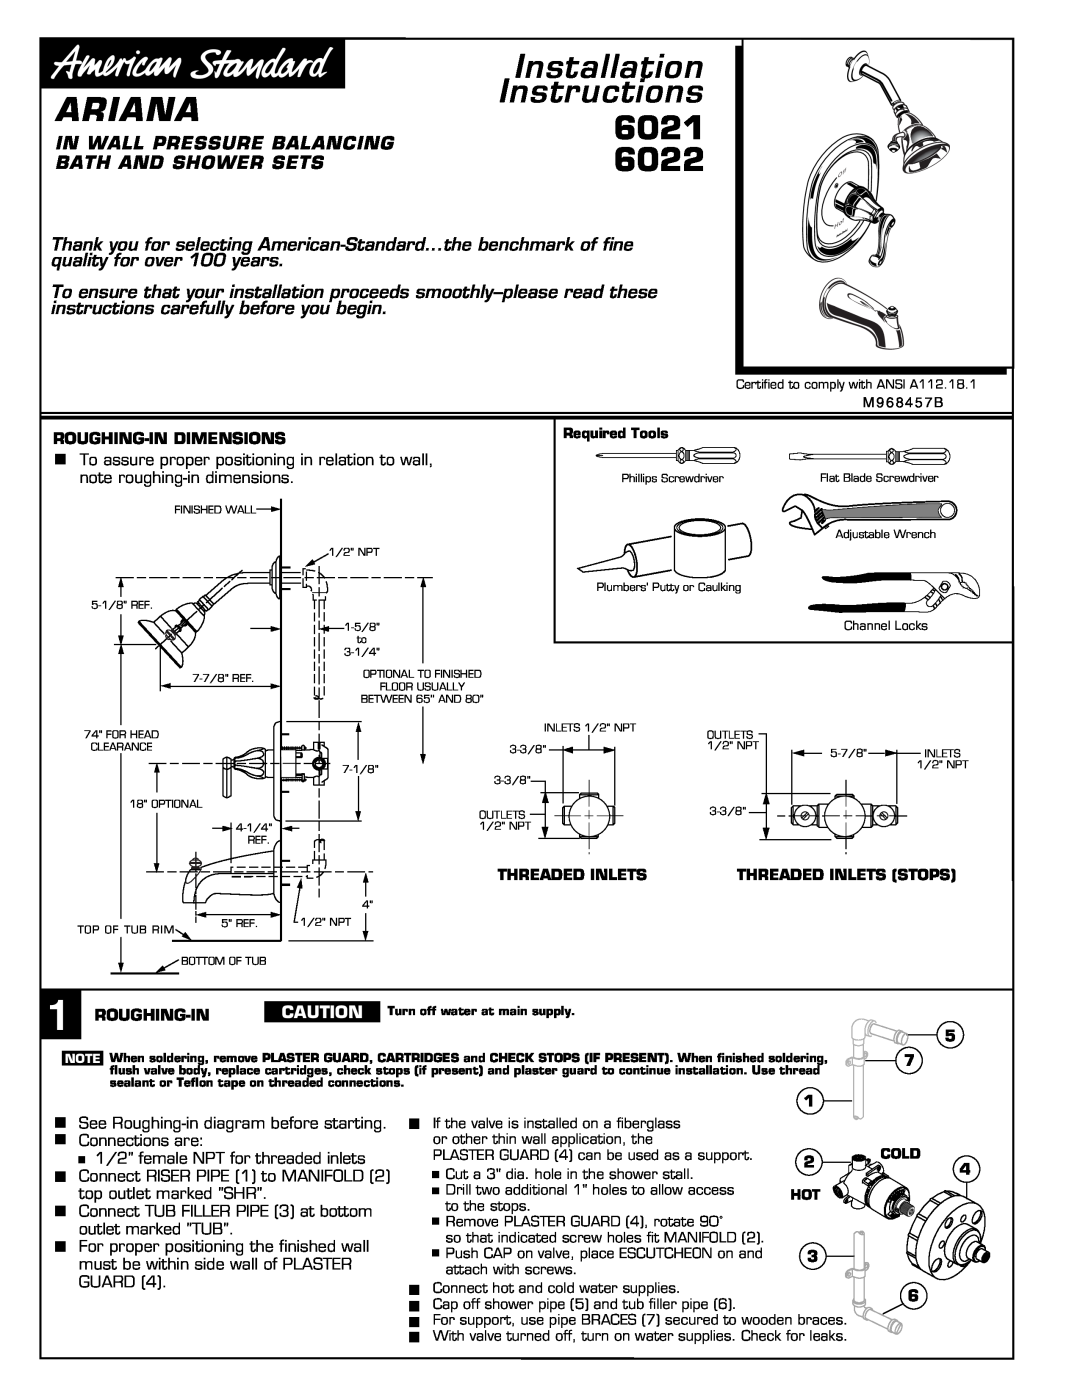 American Standard 6022 installation instructions Installation, Ariana, Instructions, 6021, In Wall Pressure Balancing 